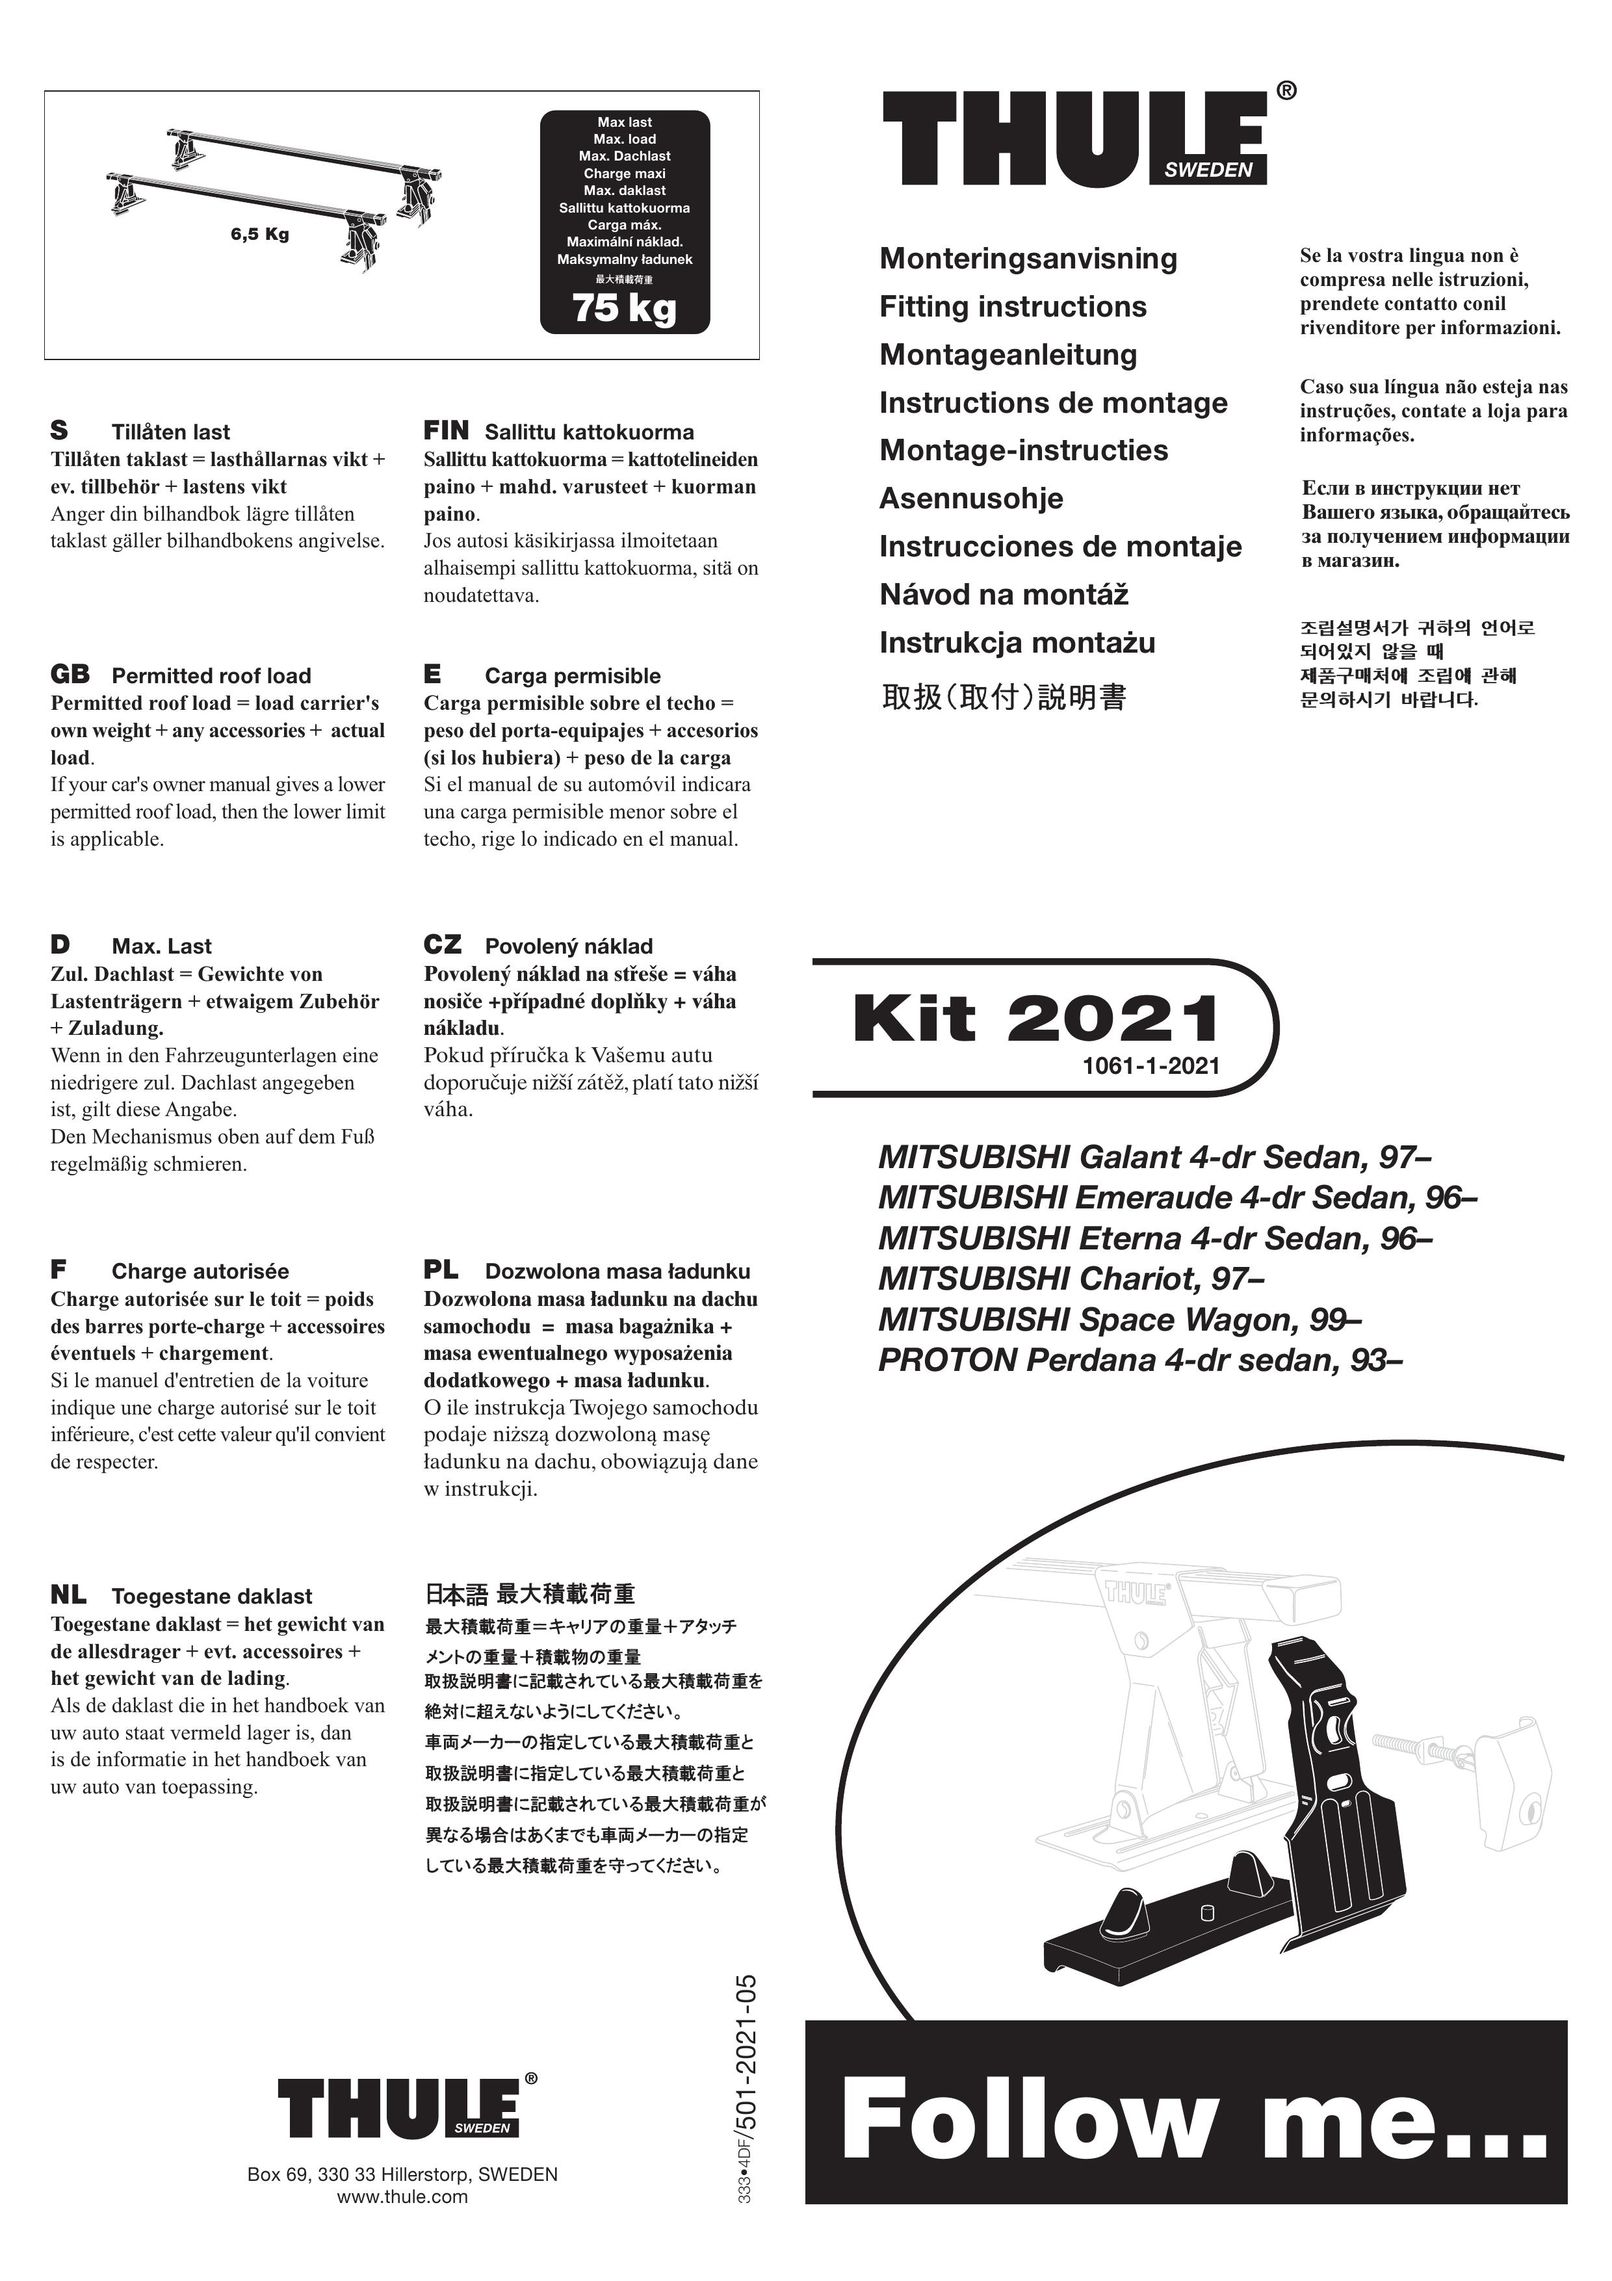 Thule Kit 2021 Bike Rack User Manual (Page 1)